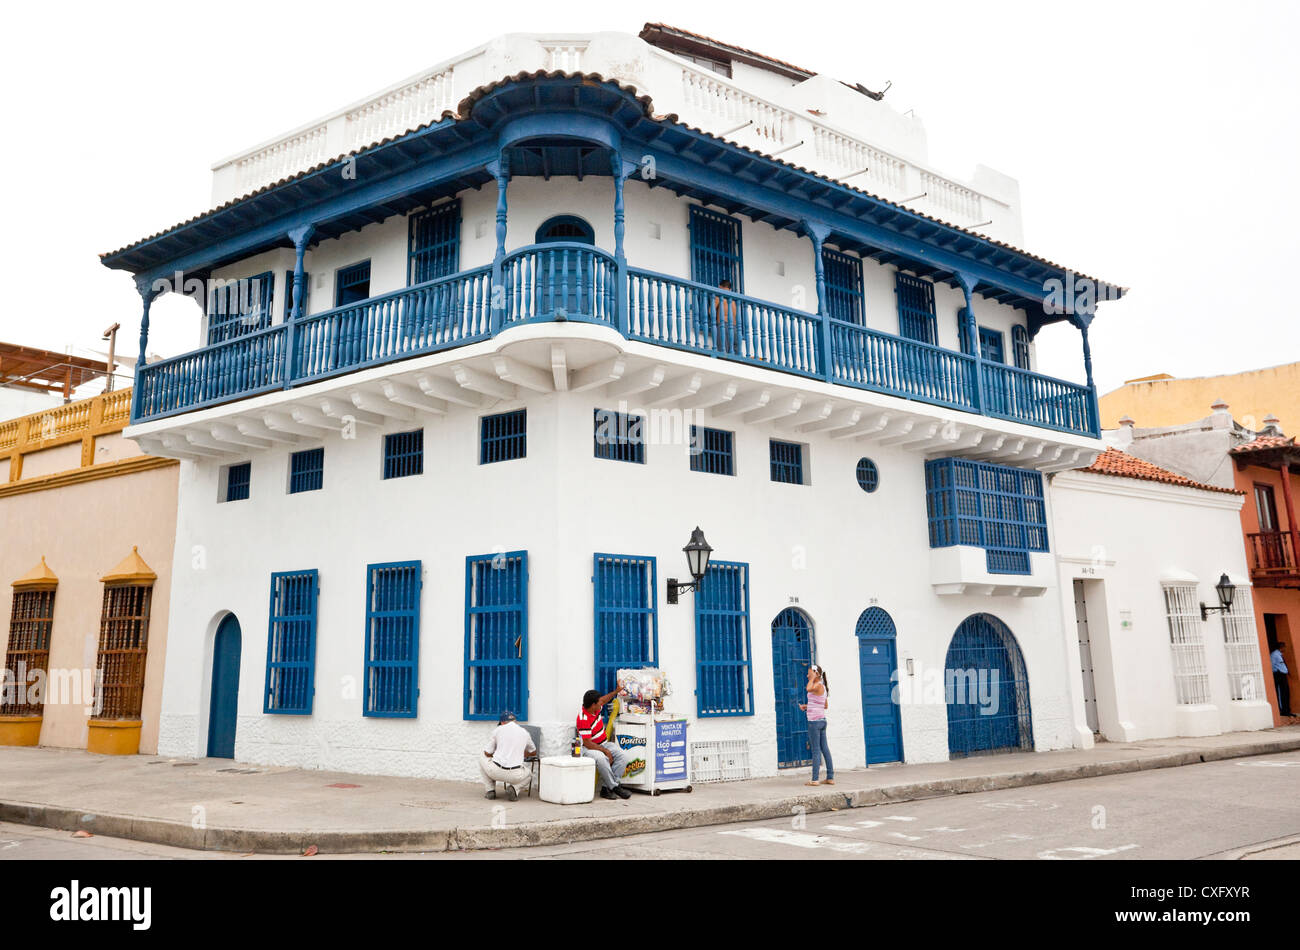 Stile coloniale spagnolo edificio ad angolo, Cartagena de Indias, Colombia. Foto Stock